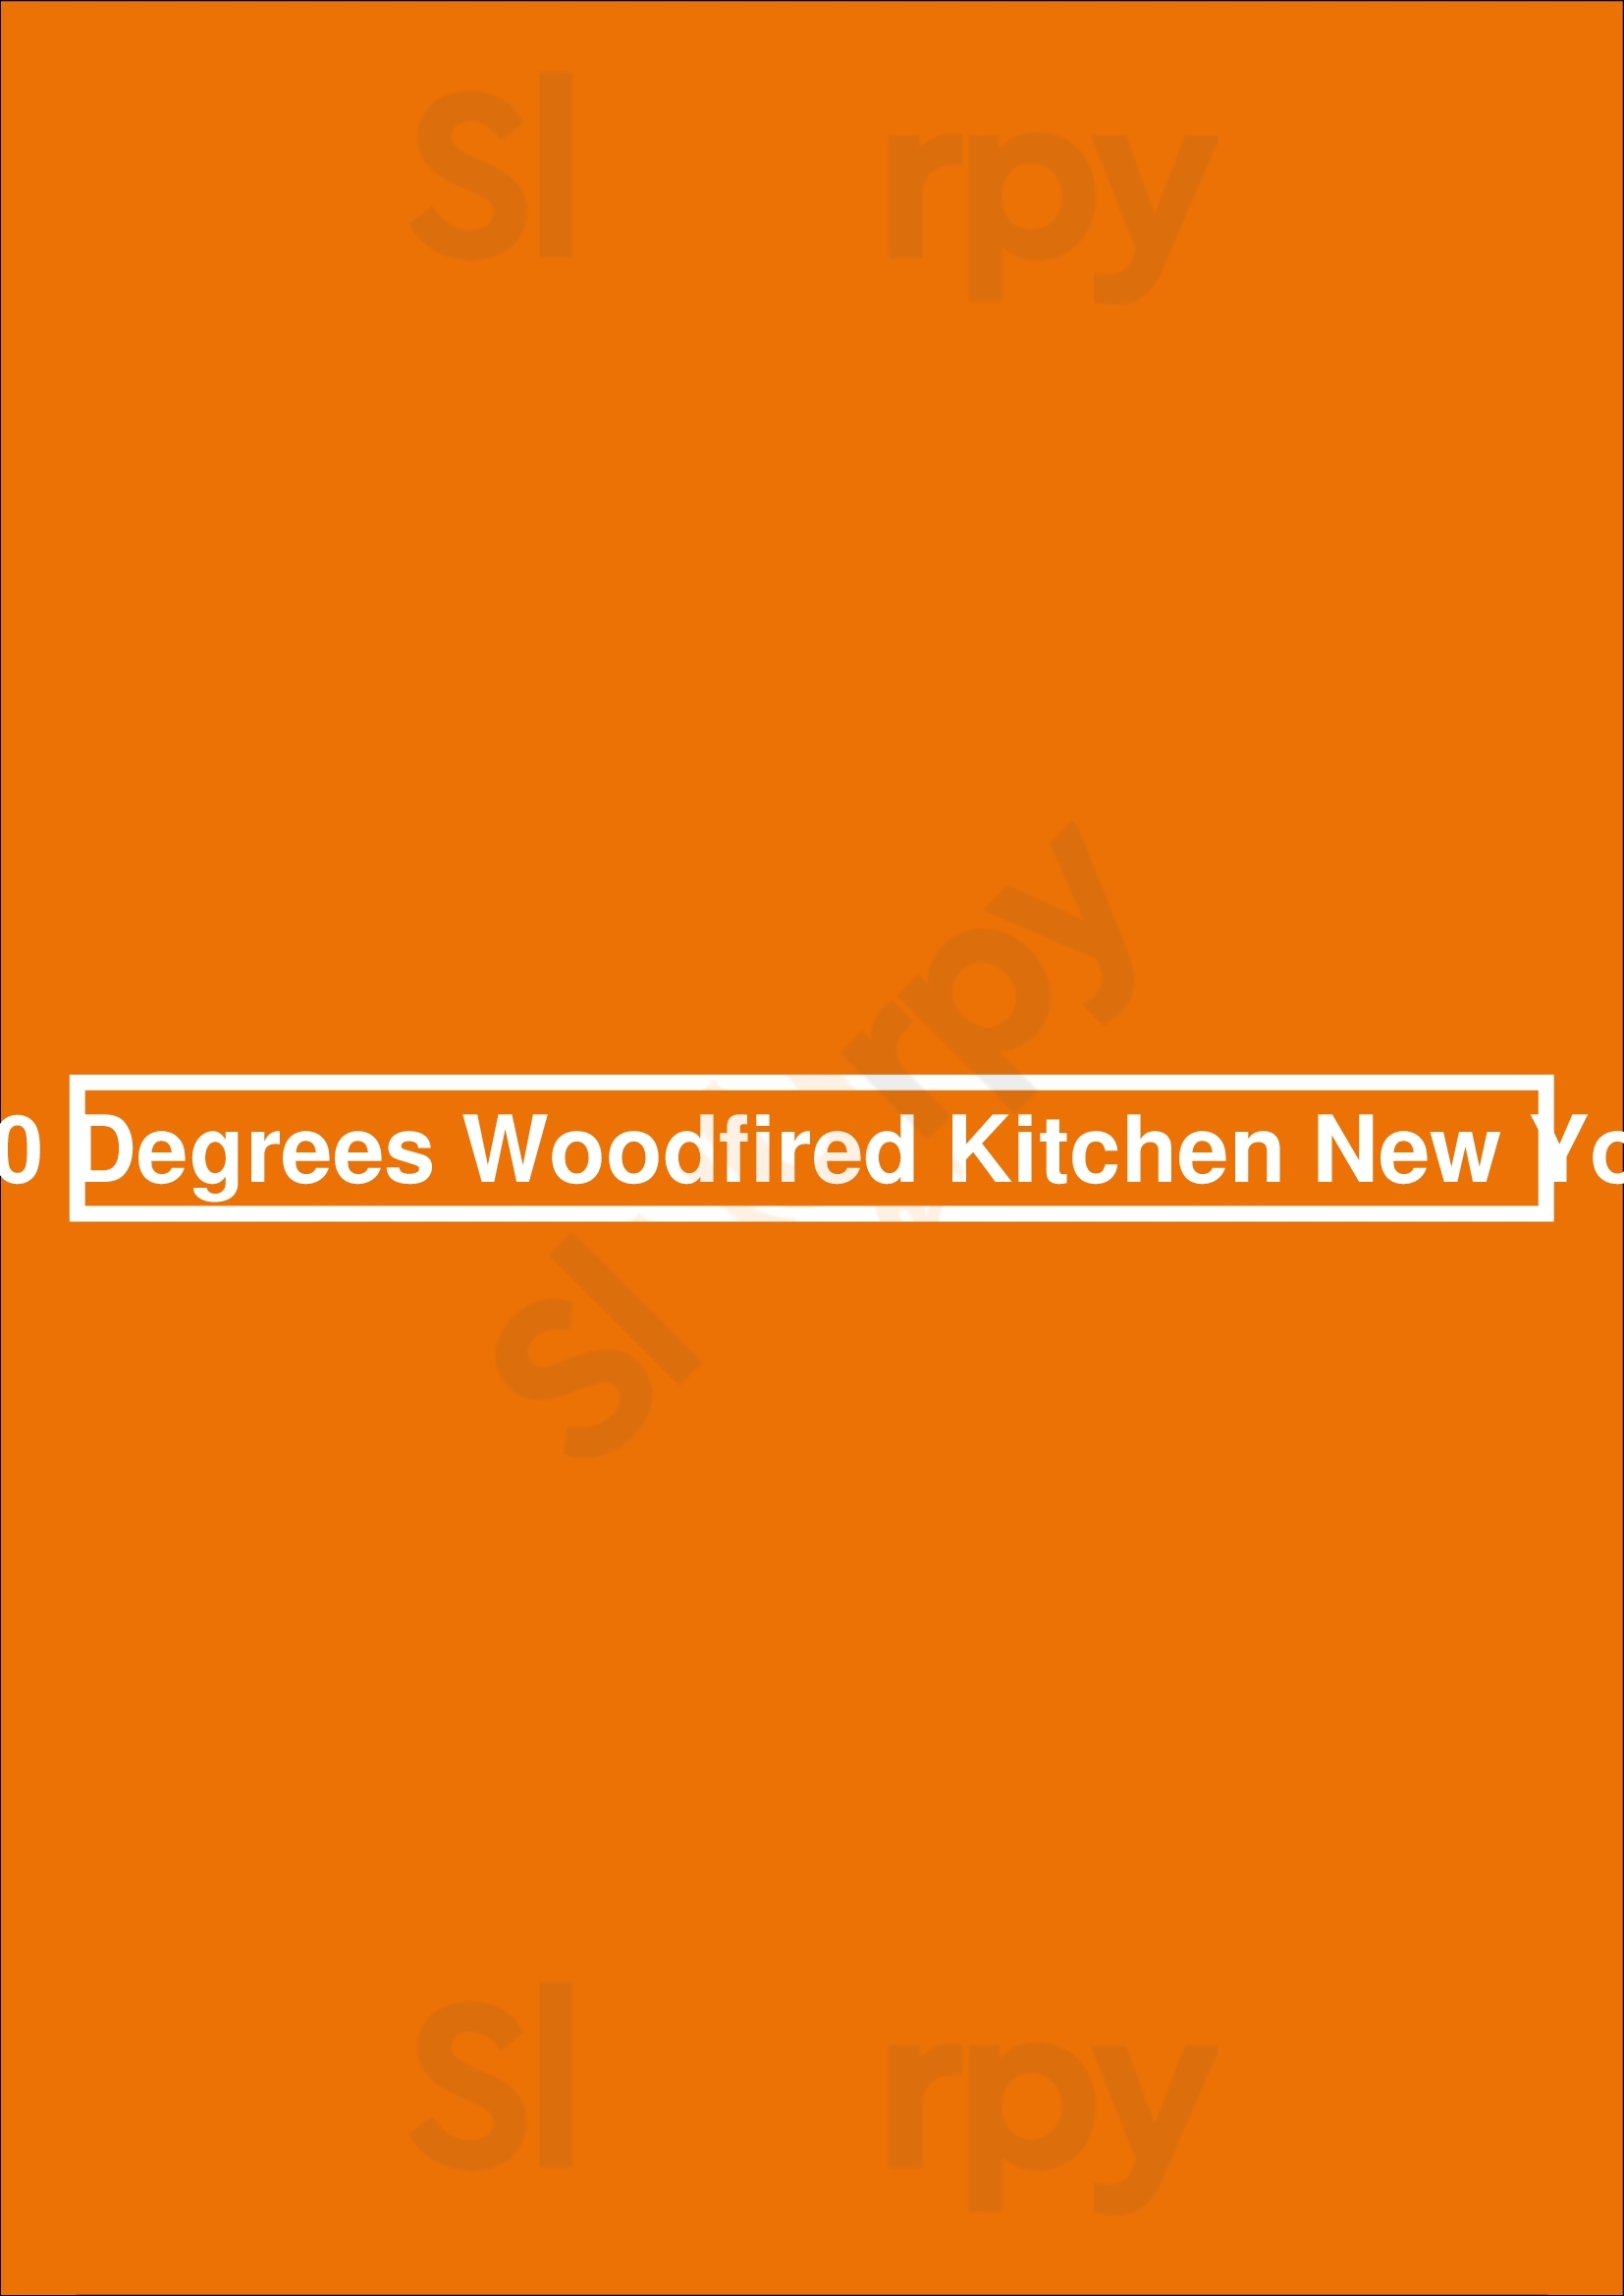 800 Degrees Woodfired Kitchen New York New York City Menu - 1